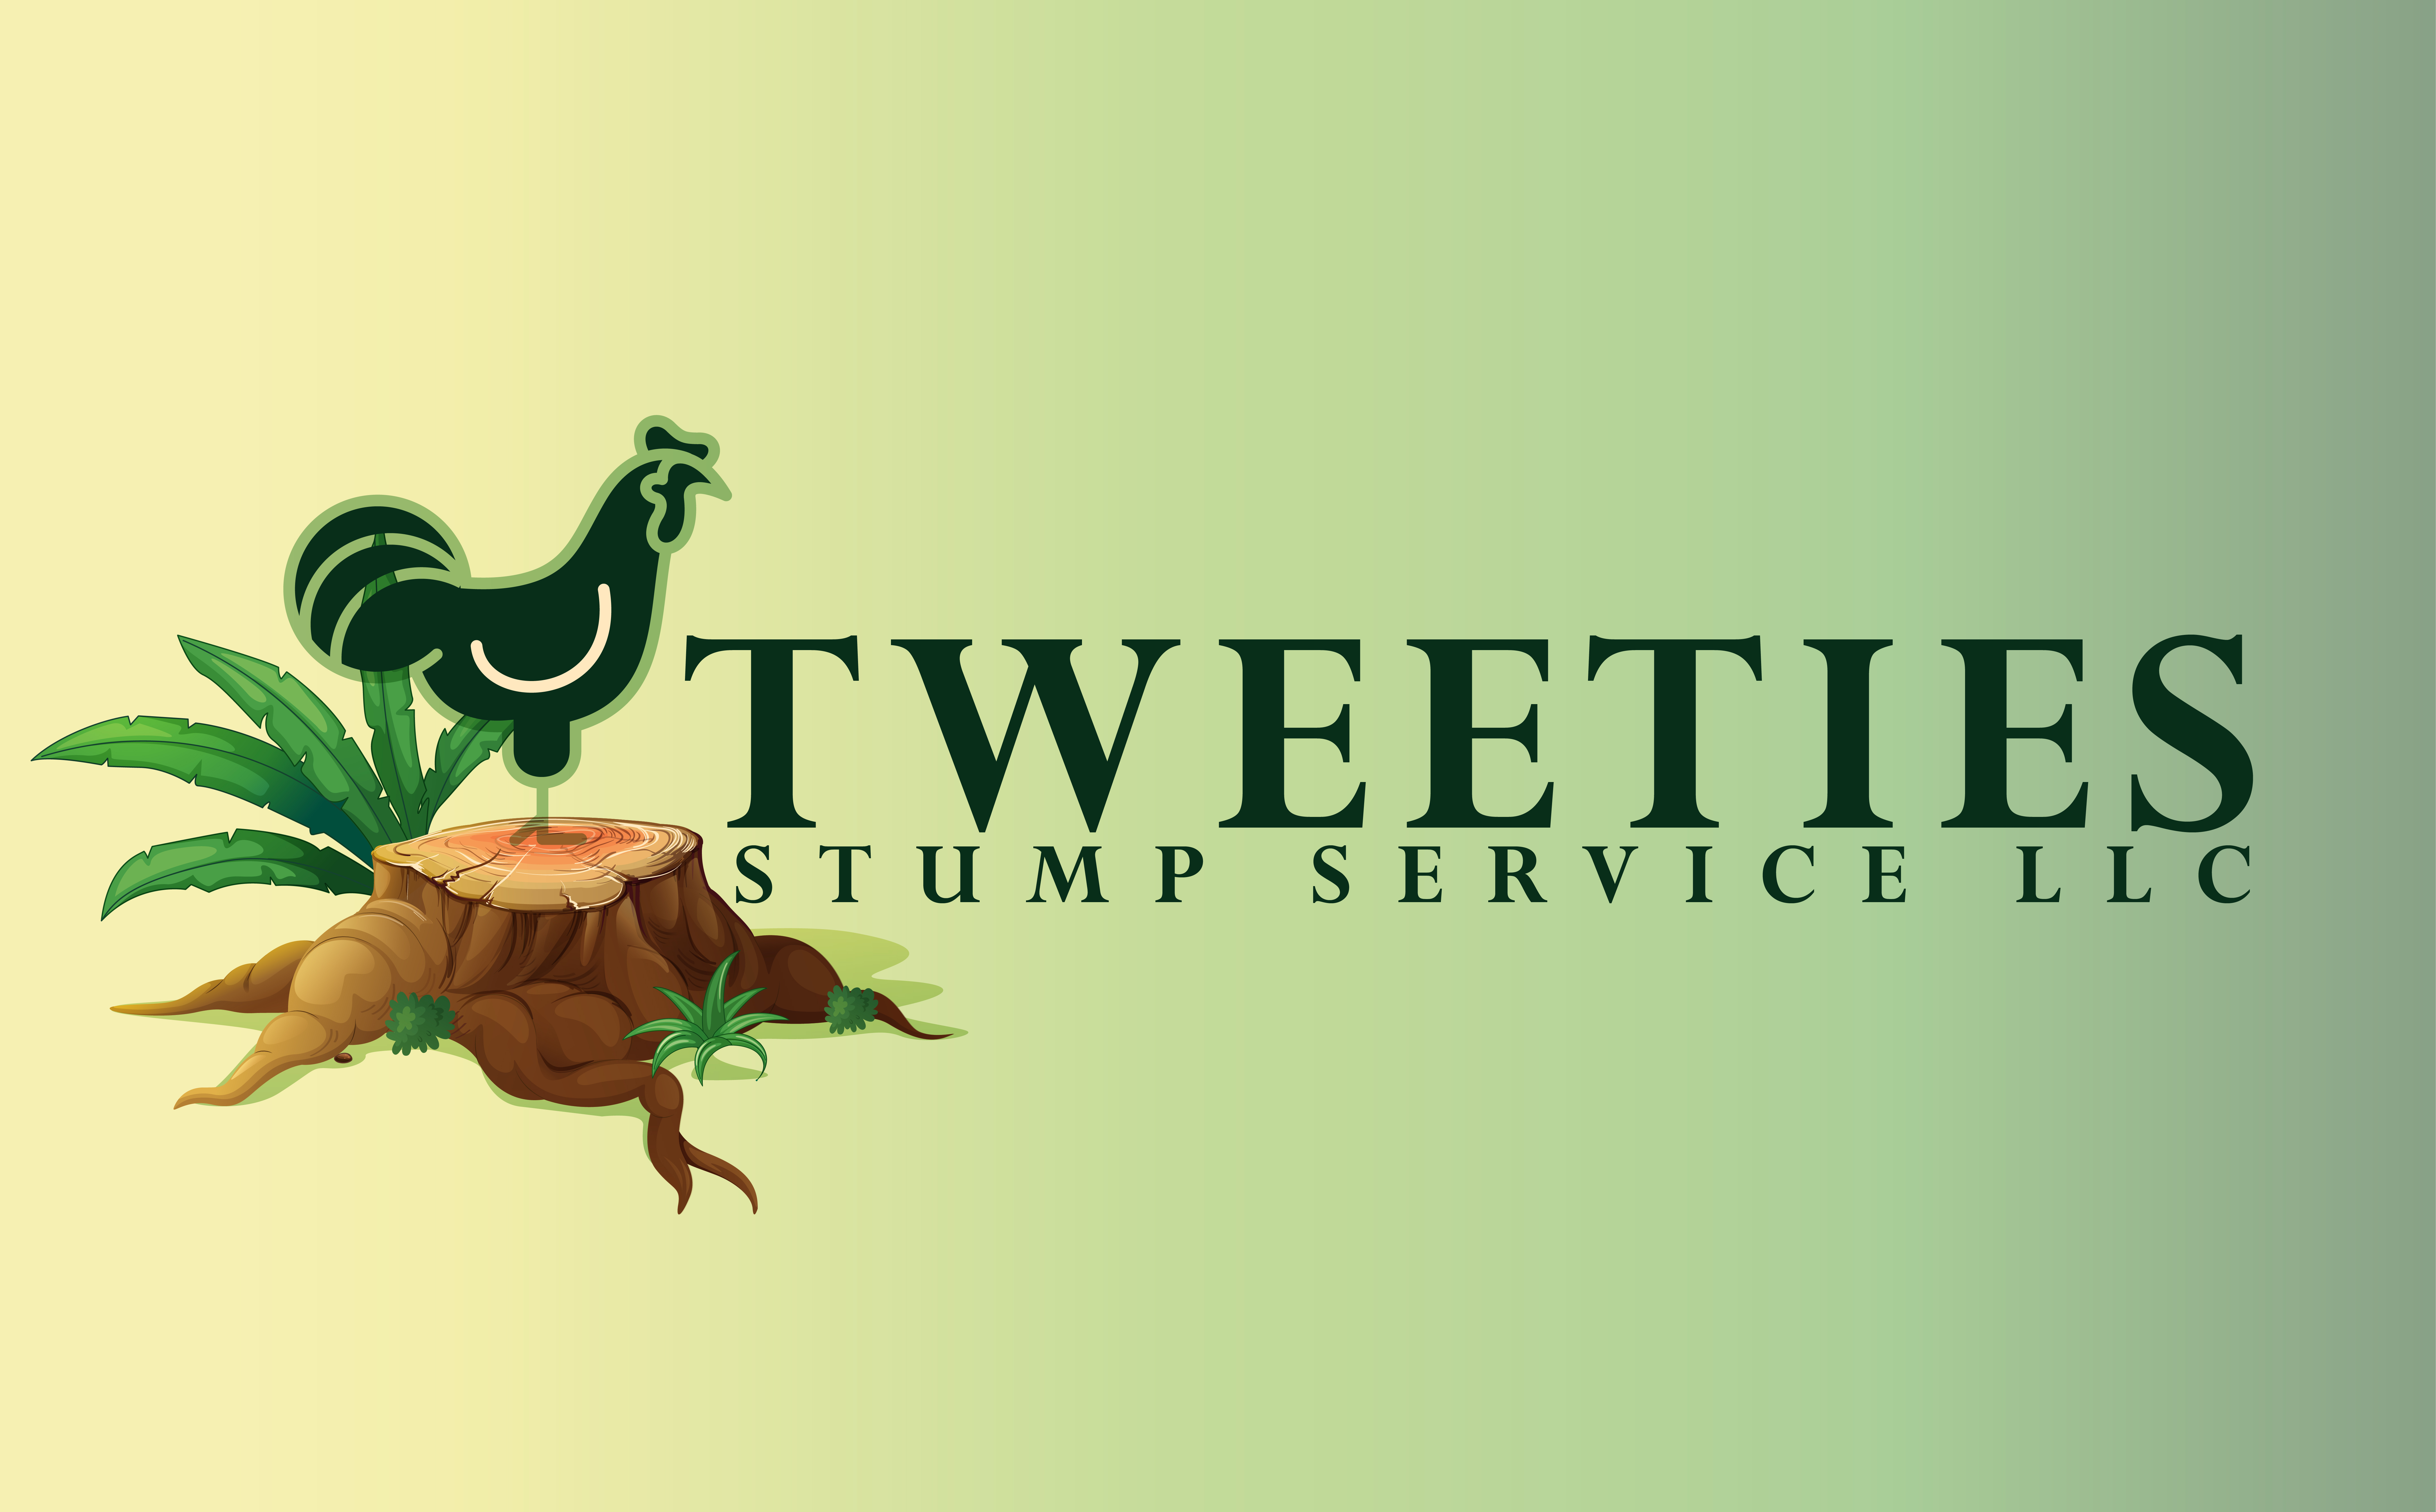 Tweeties Stump Service LLC Logo